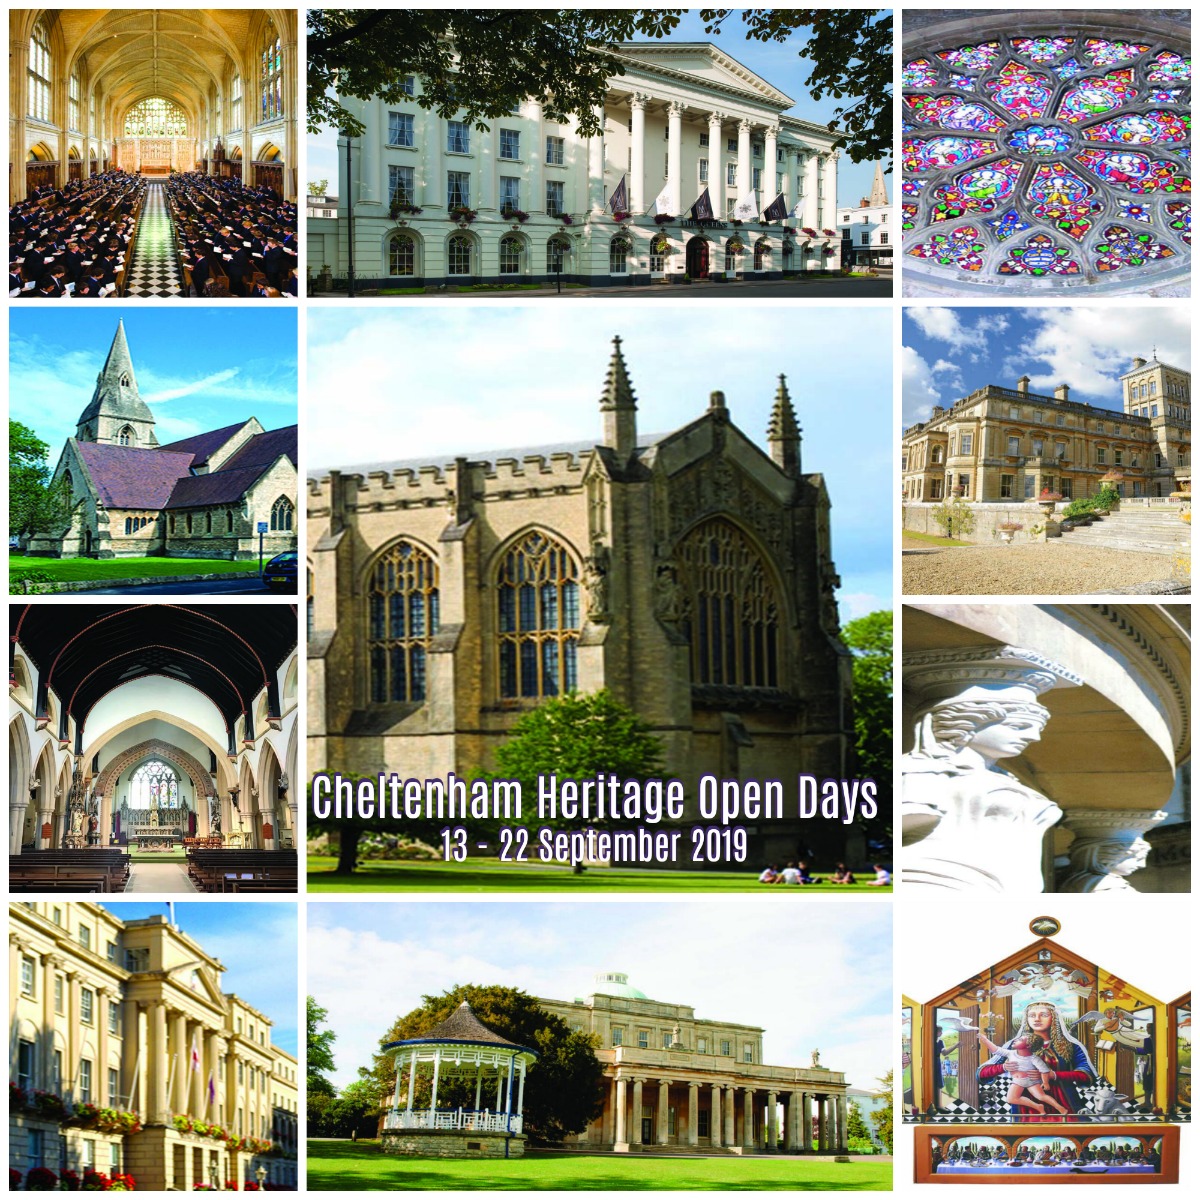 Cheltenham Heritage Open Days promotional poster